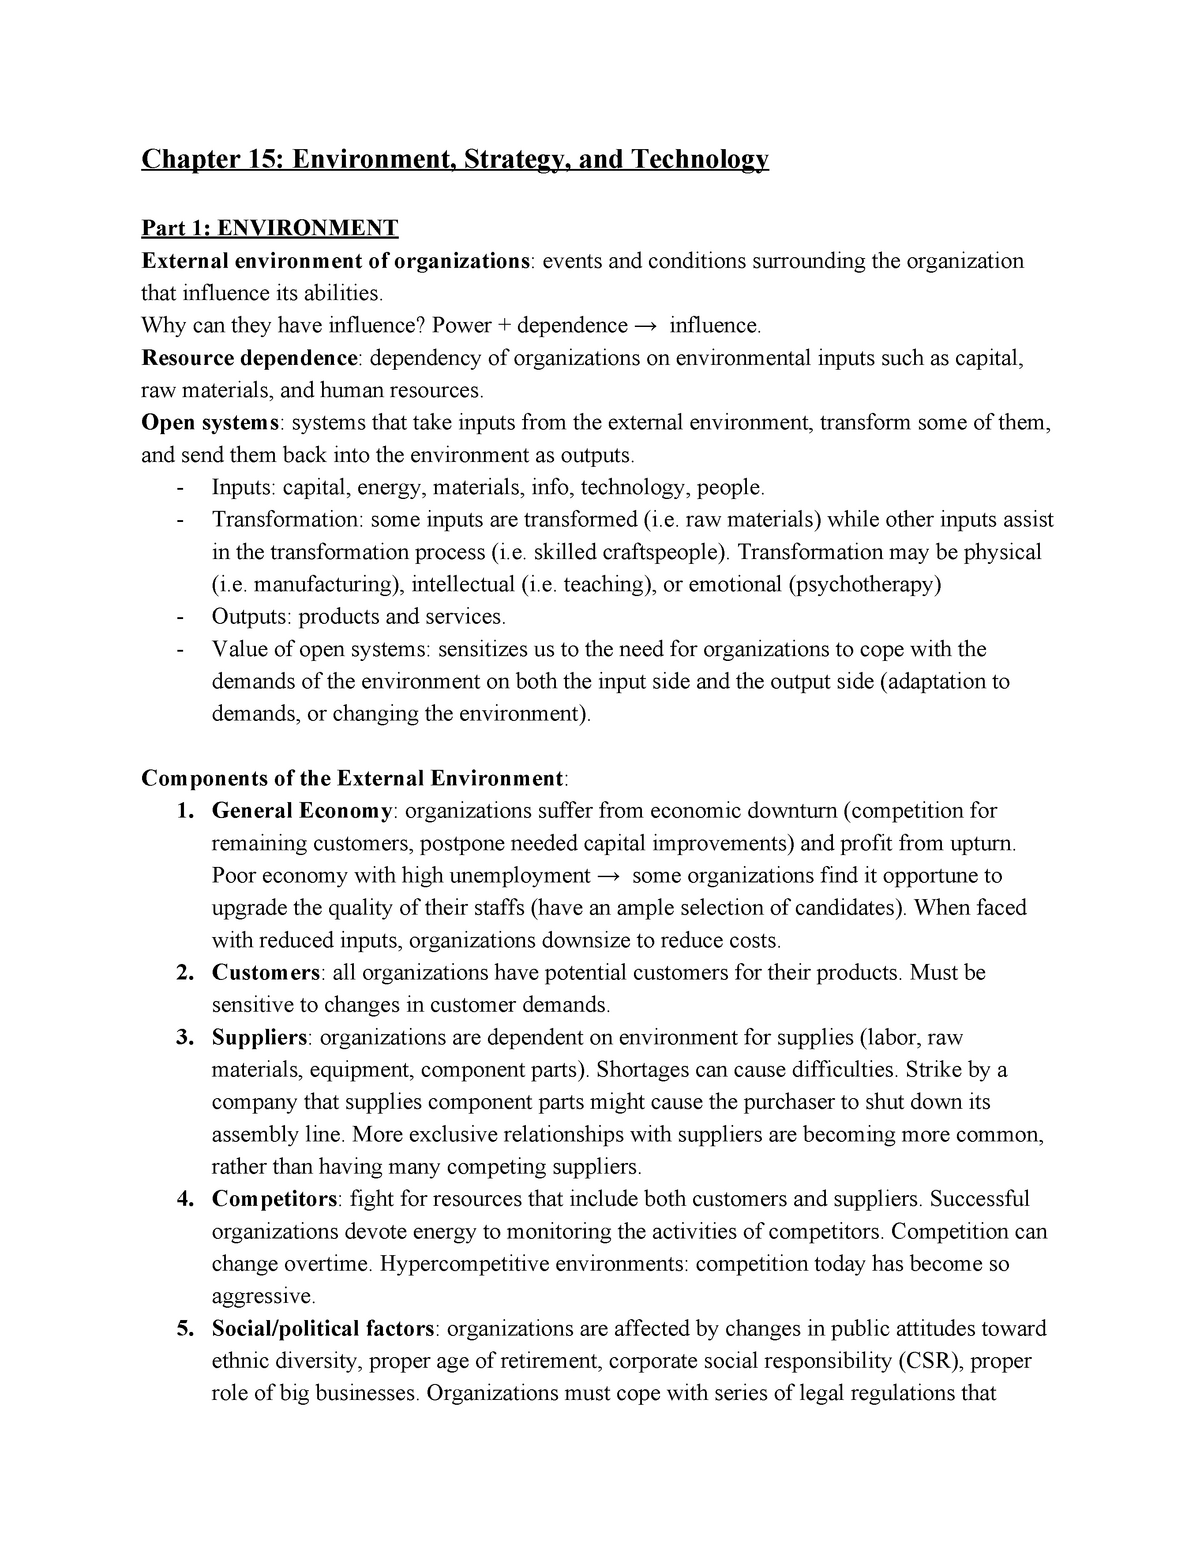 organisational behaviour assignment pdf